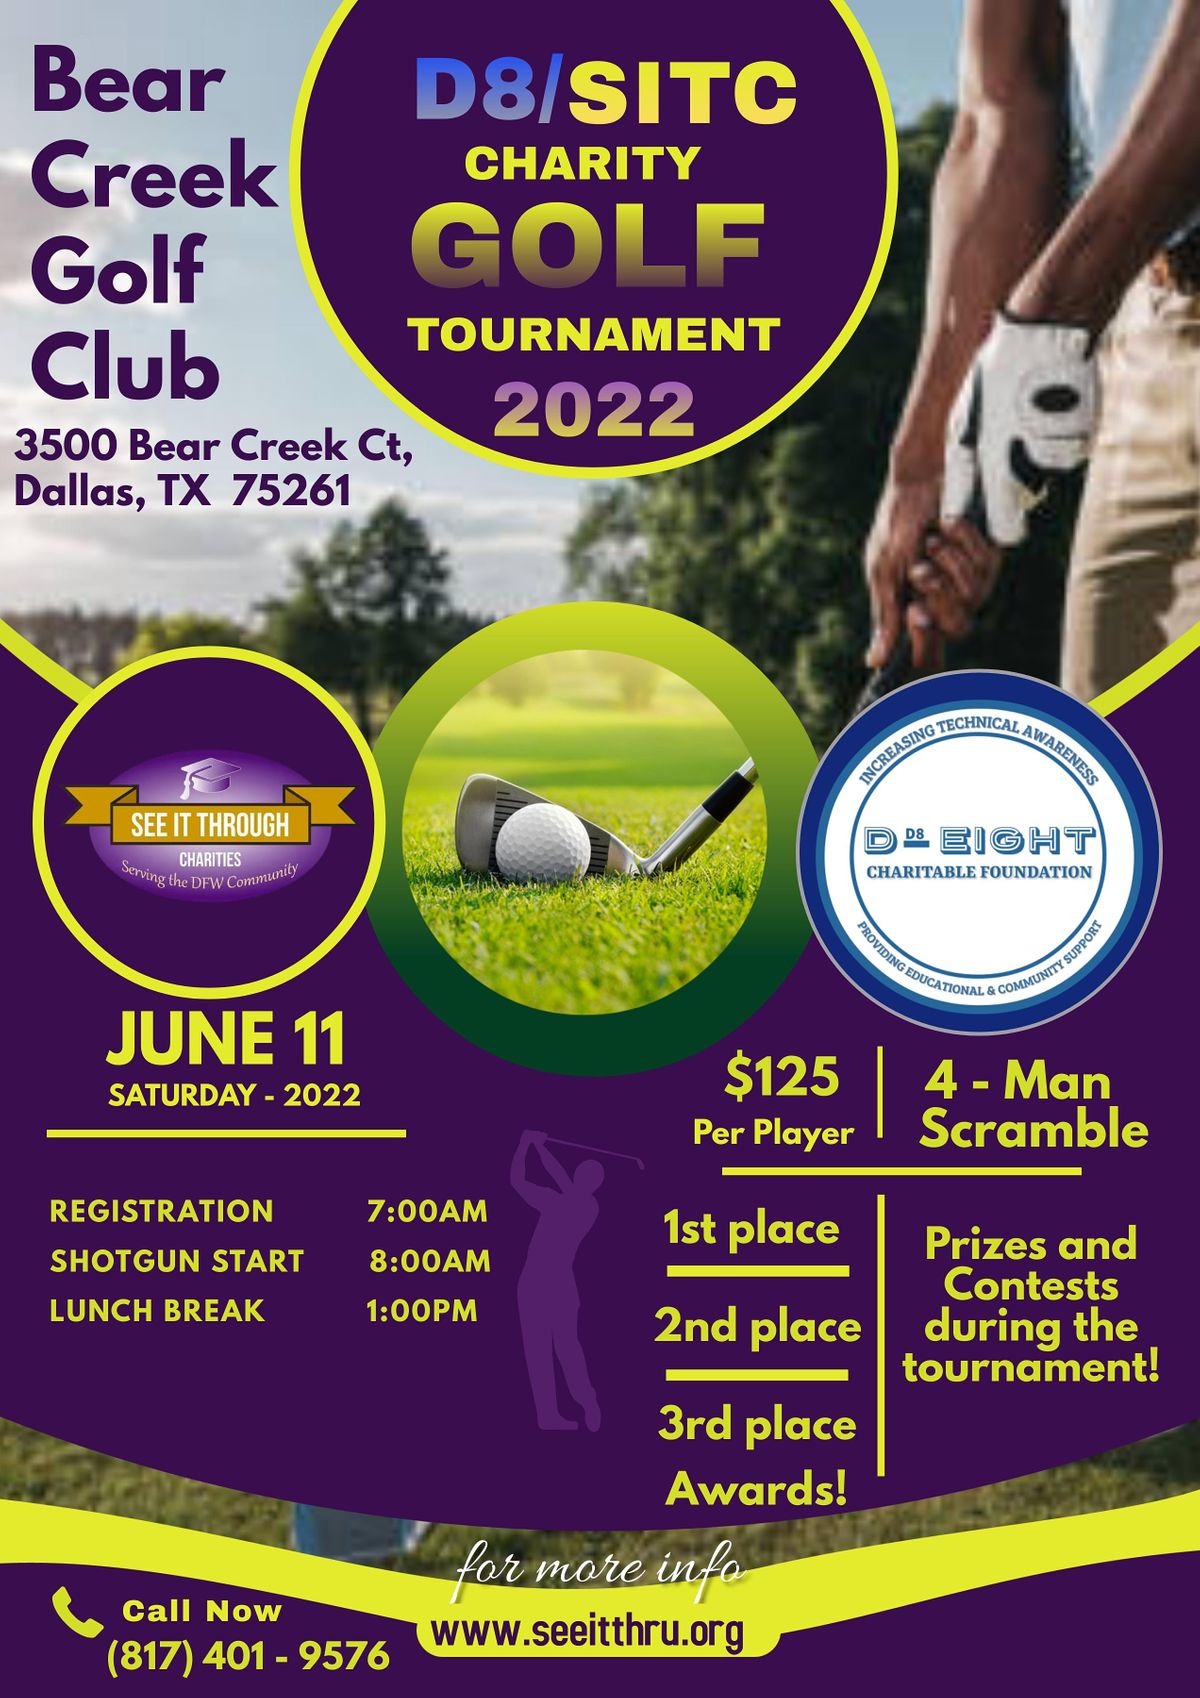 D8 Charitable Foundation\/SITC Gala Golf Tournament 2022